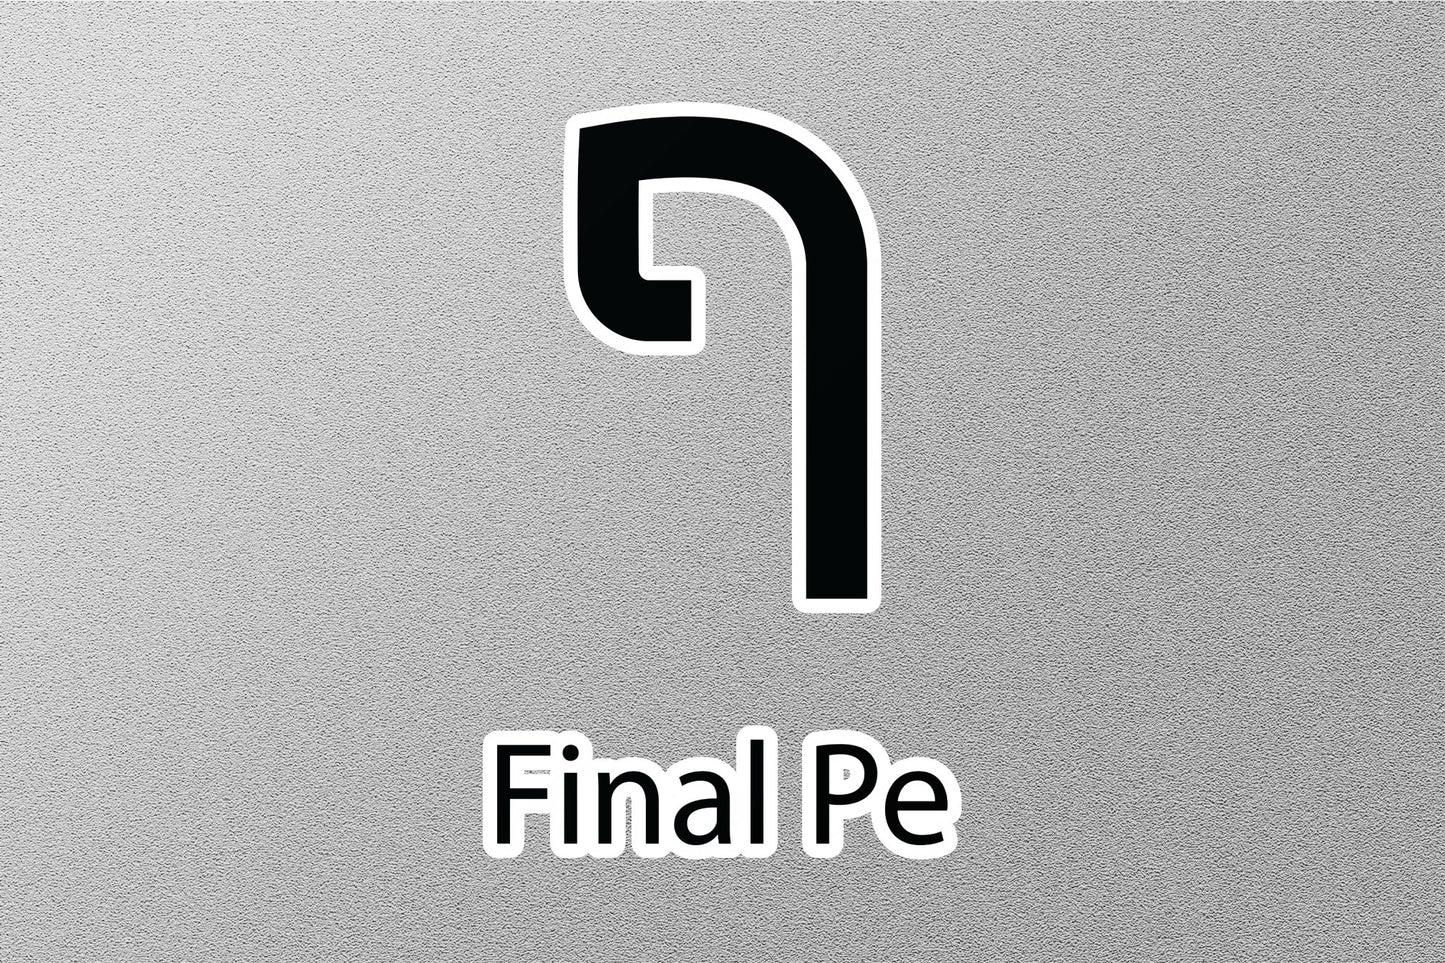 Final Pe Hebrew Alphabet Sticker